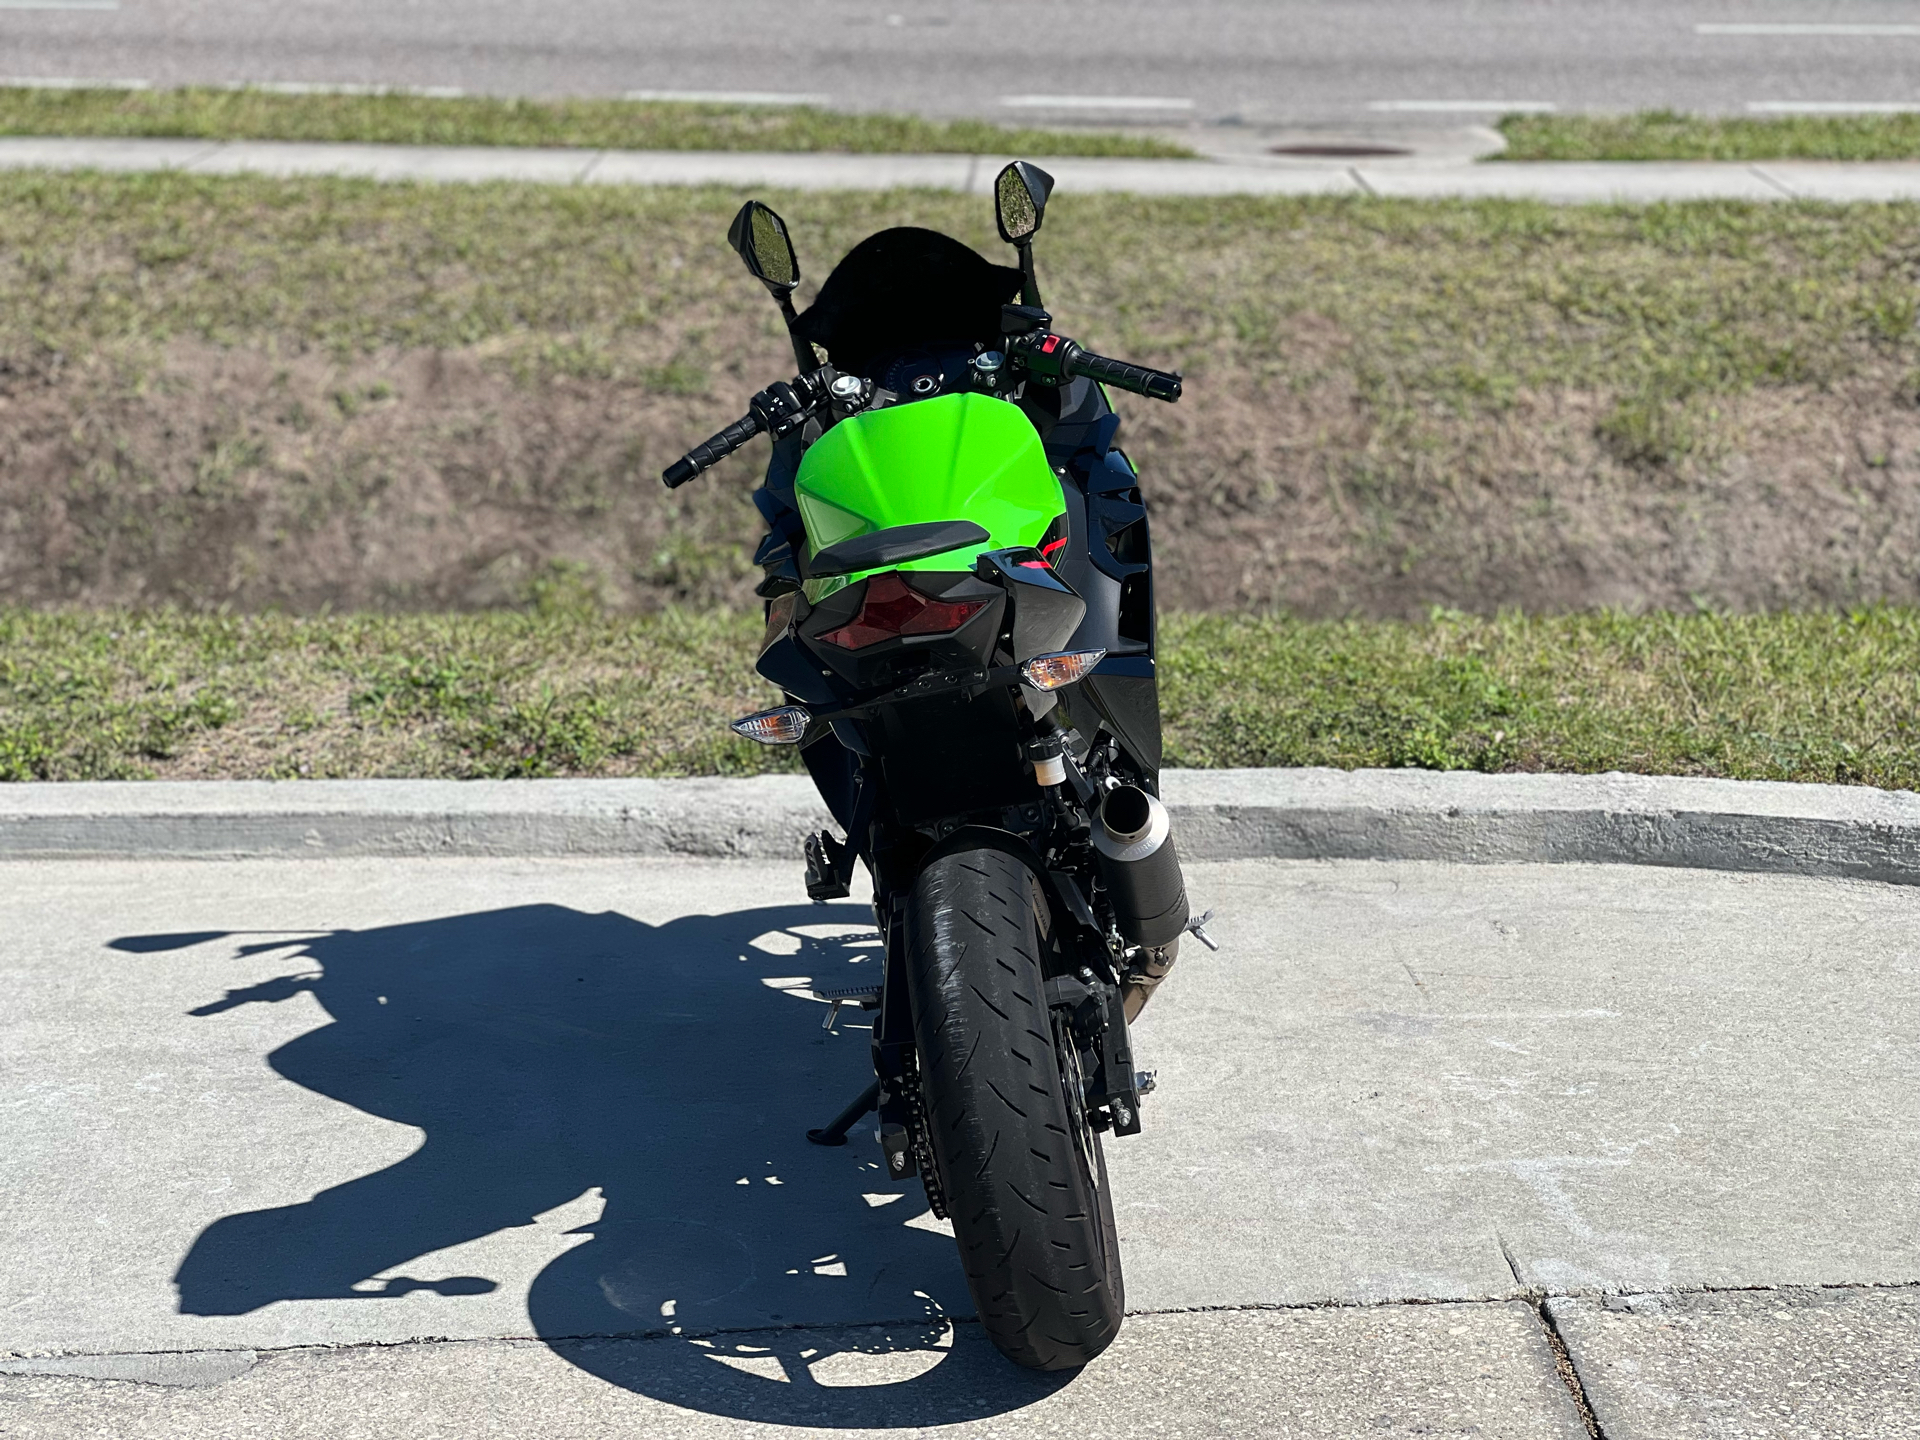 2022 Kawasaki Ninja 400 ABS KRT Edition in Orlando, Florida - Photo 7